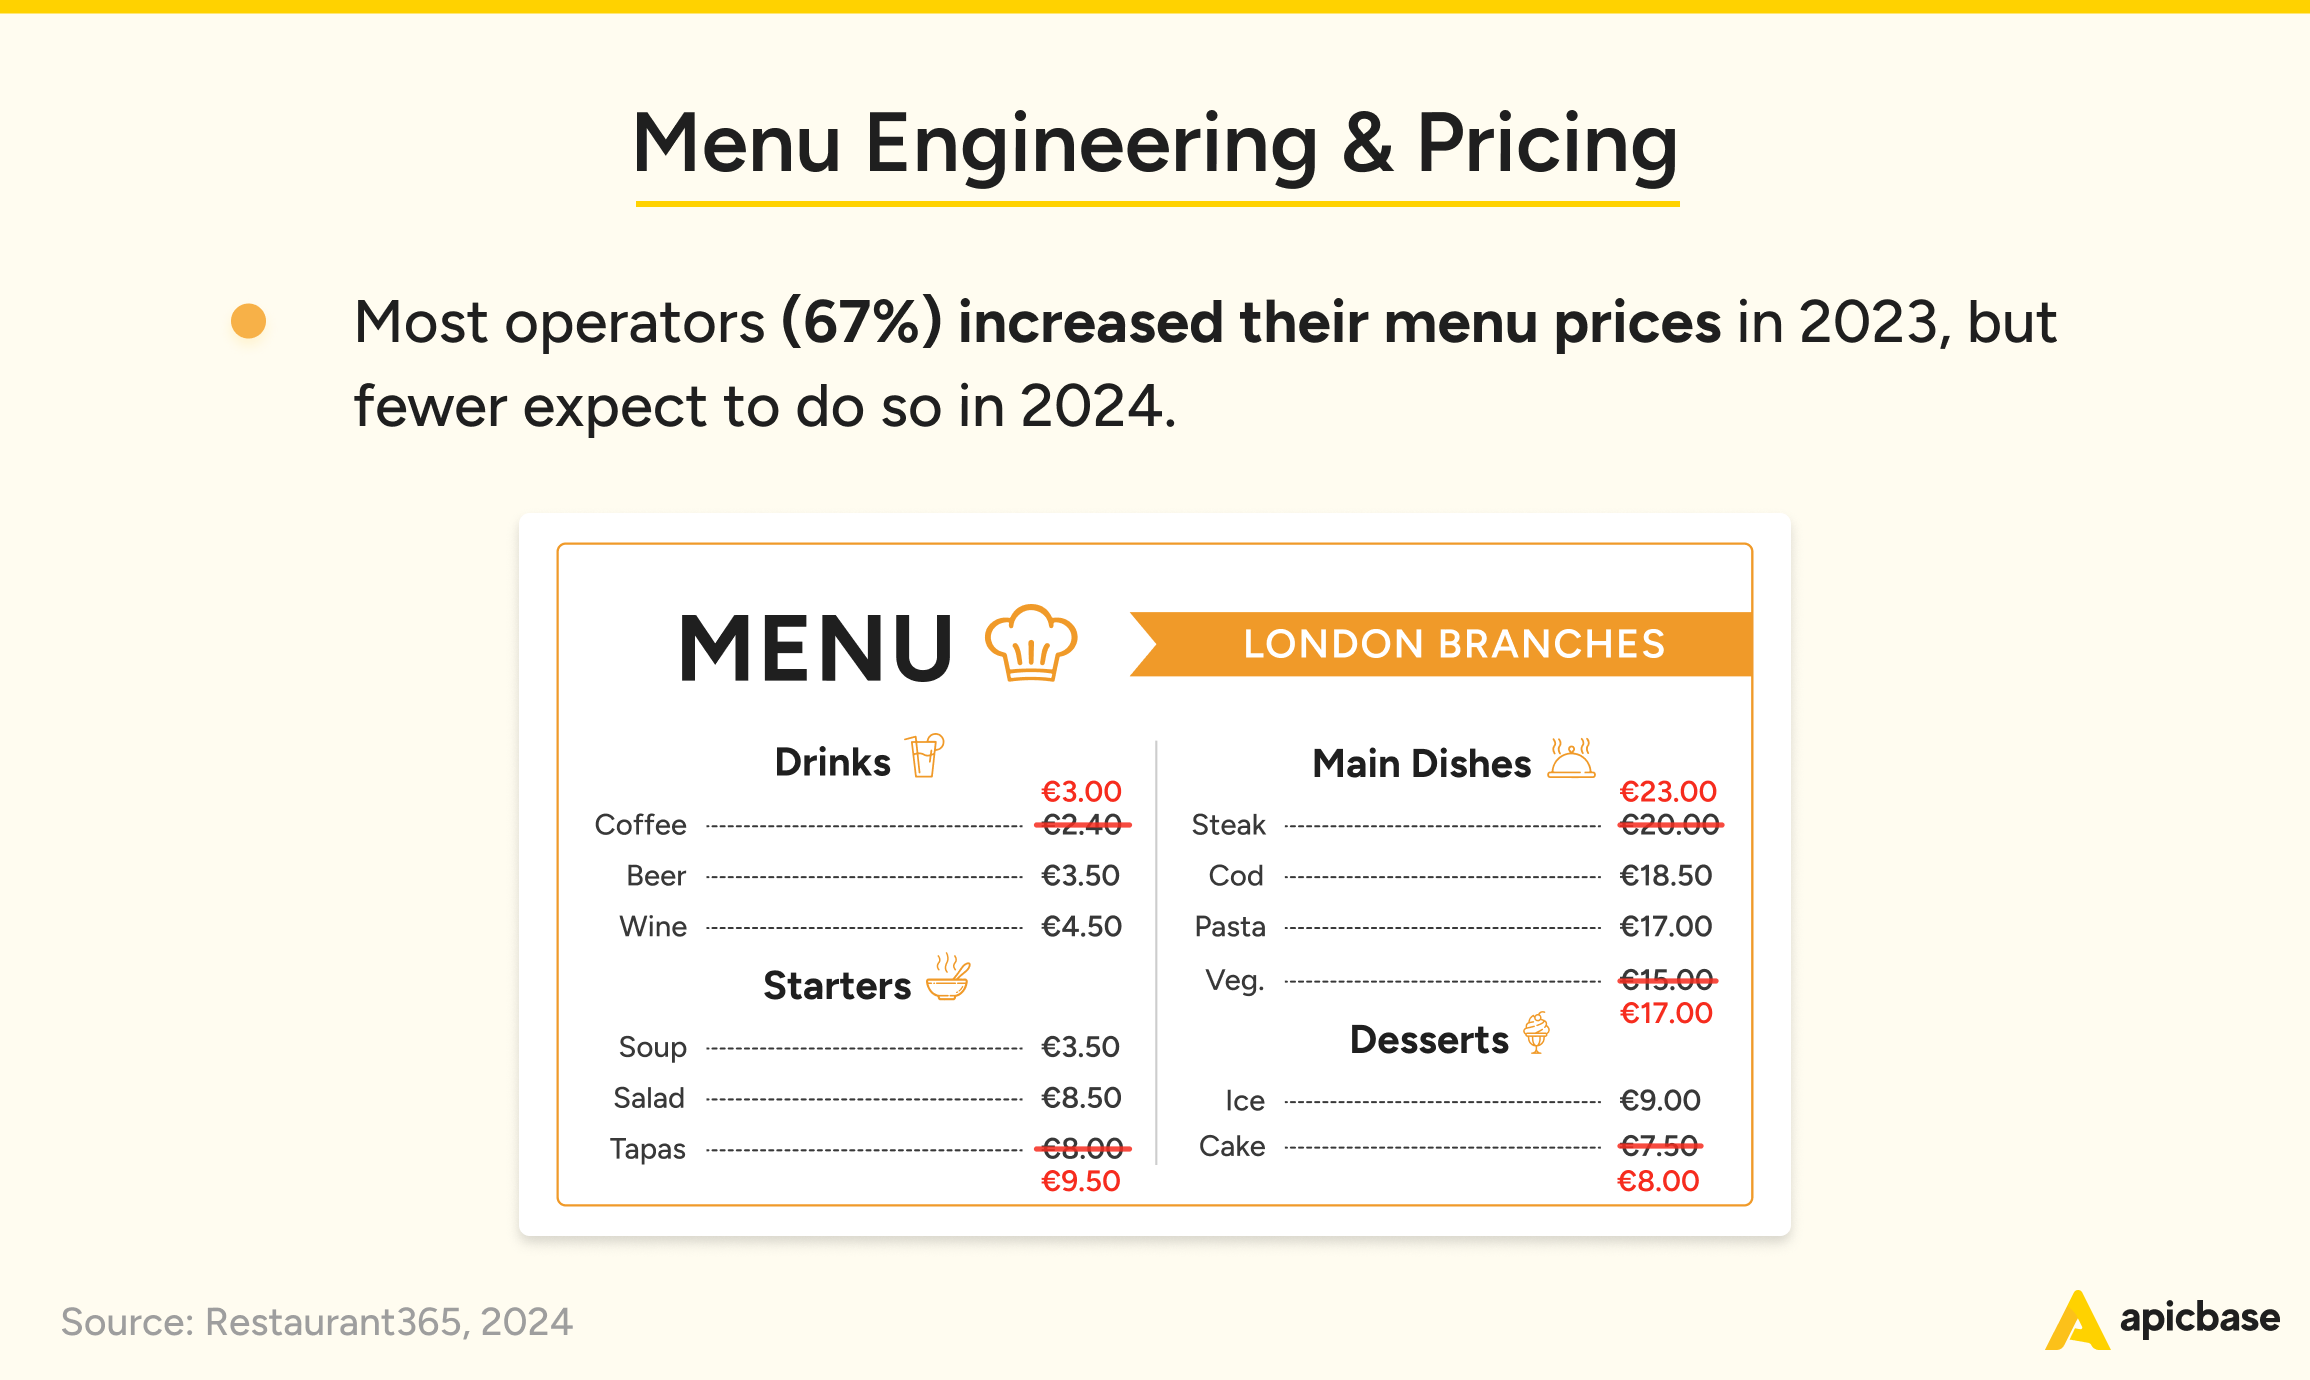 Menu Engineering & Pricing Statistics